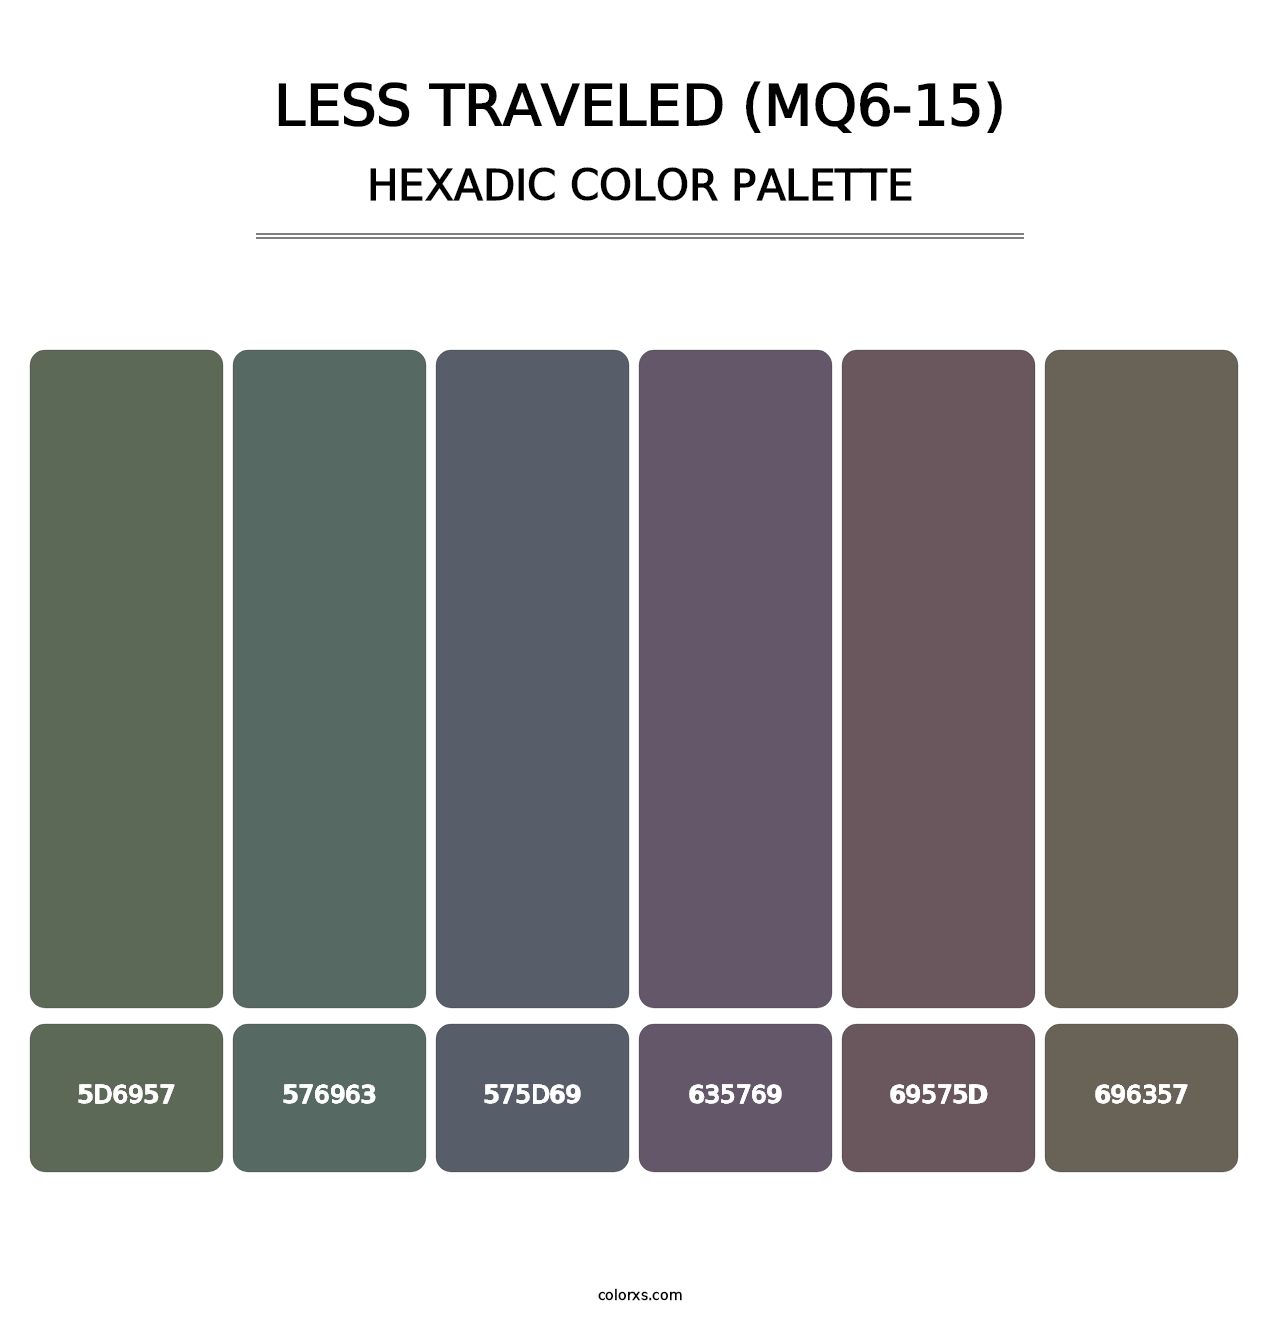 Less Traveled (MQ6-15) - Hexadic Color Palette